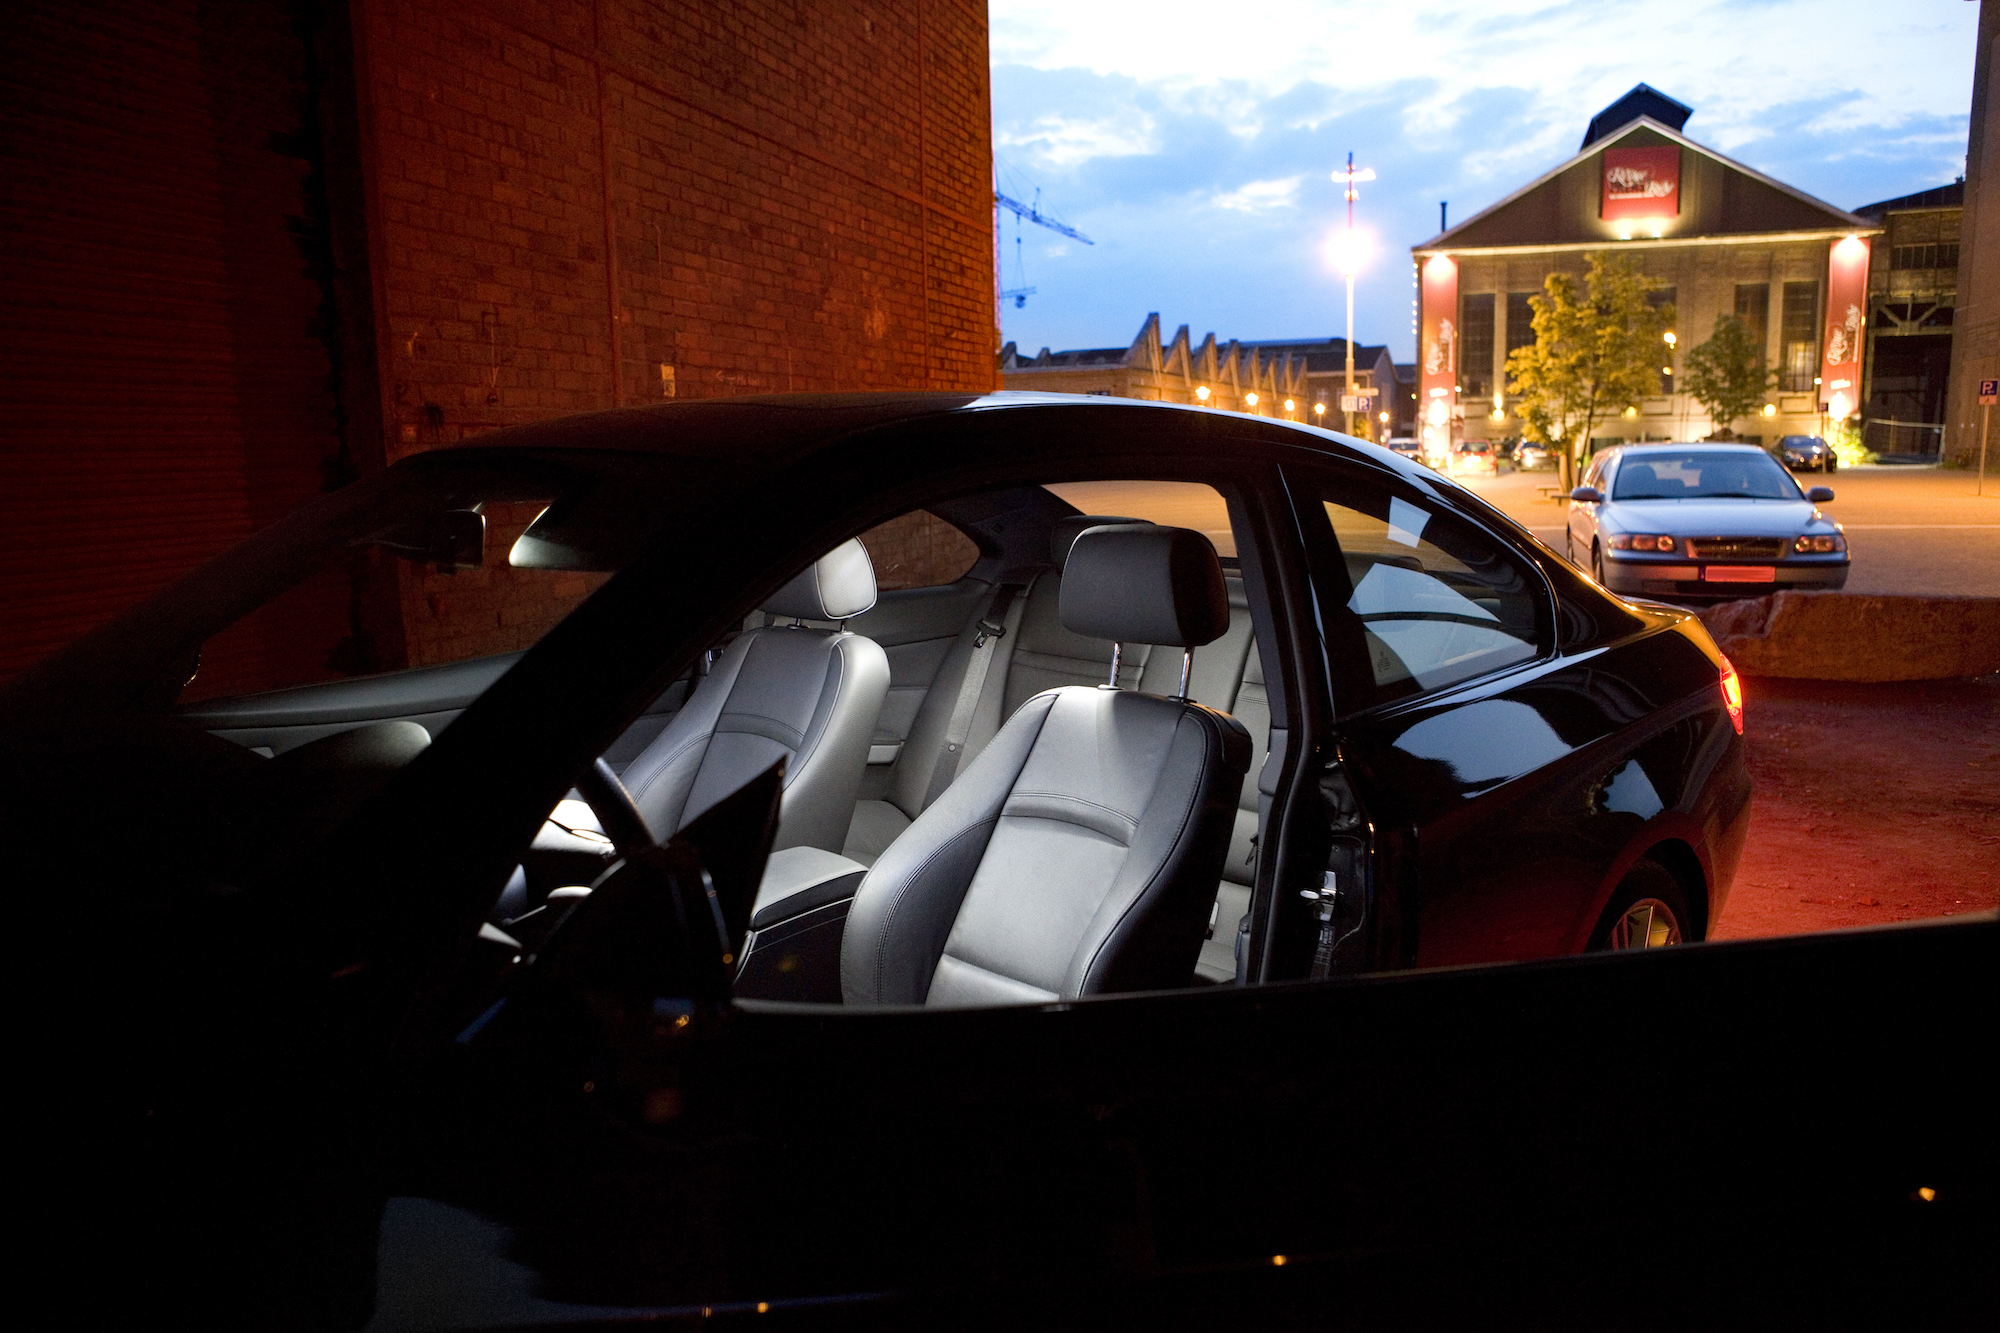 SMD LED Innenraumbeleuchtung Set für Mercedes E-Klasse W211, SMD LED  Innenraumlicht Sets für Mercedes, LED Sets, Auto Innenraumlicht, LED Auto  Innenraumbeleuchtung